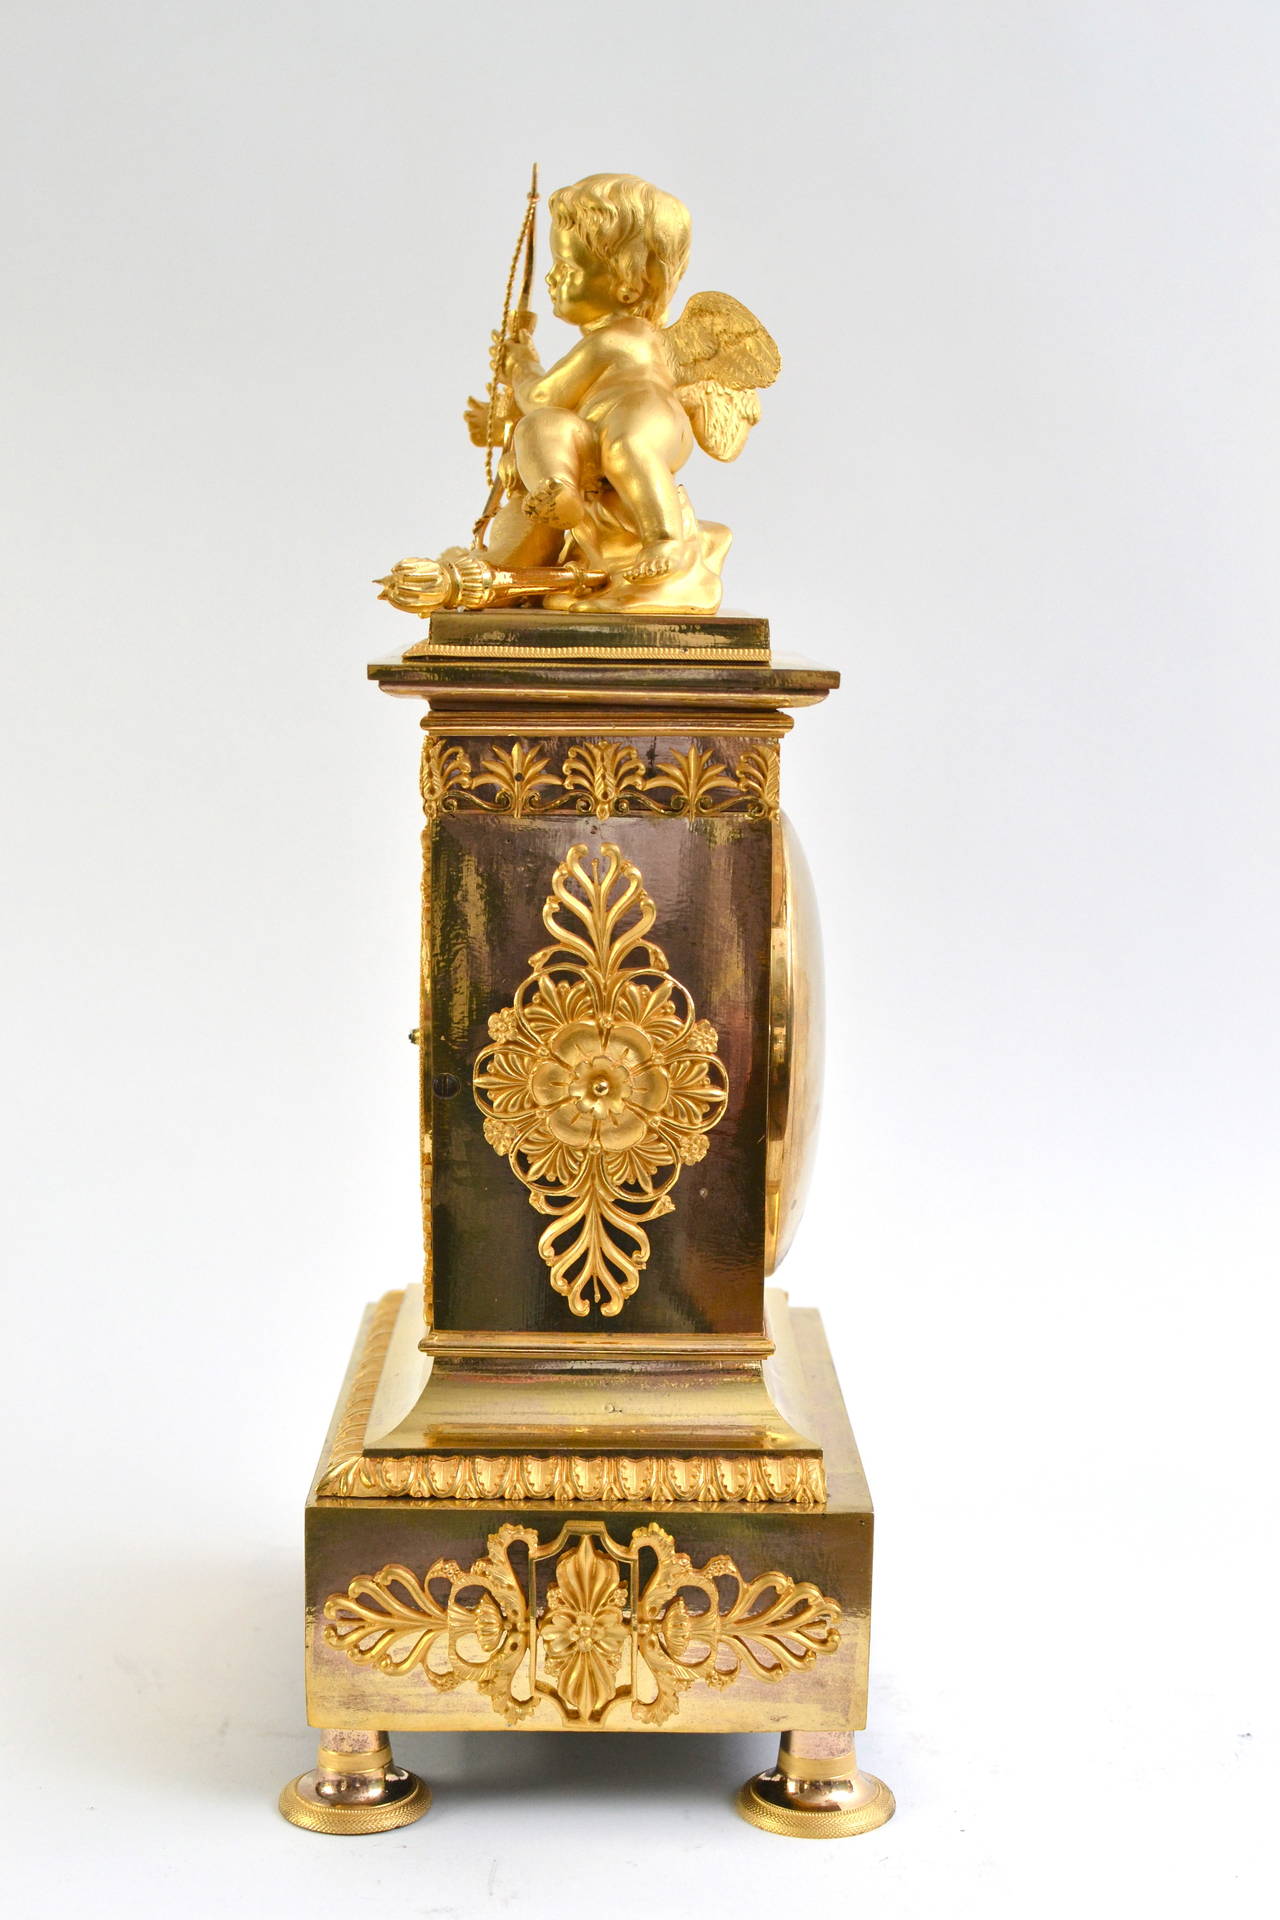 An Empire gilt bronze mantel clock, Paris, early 19th century, signed.